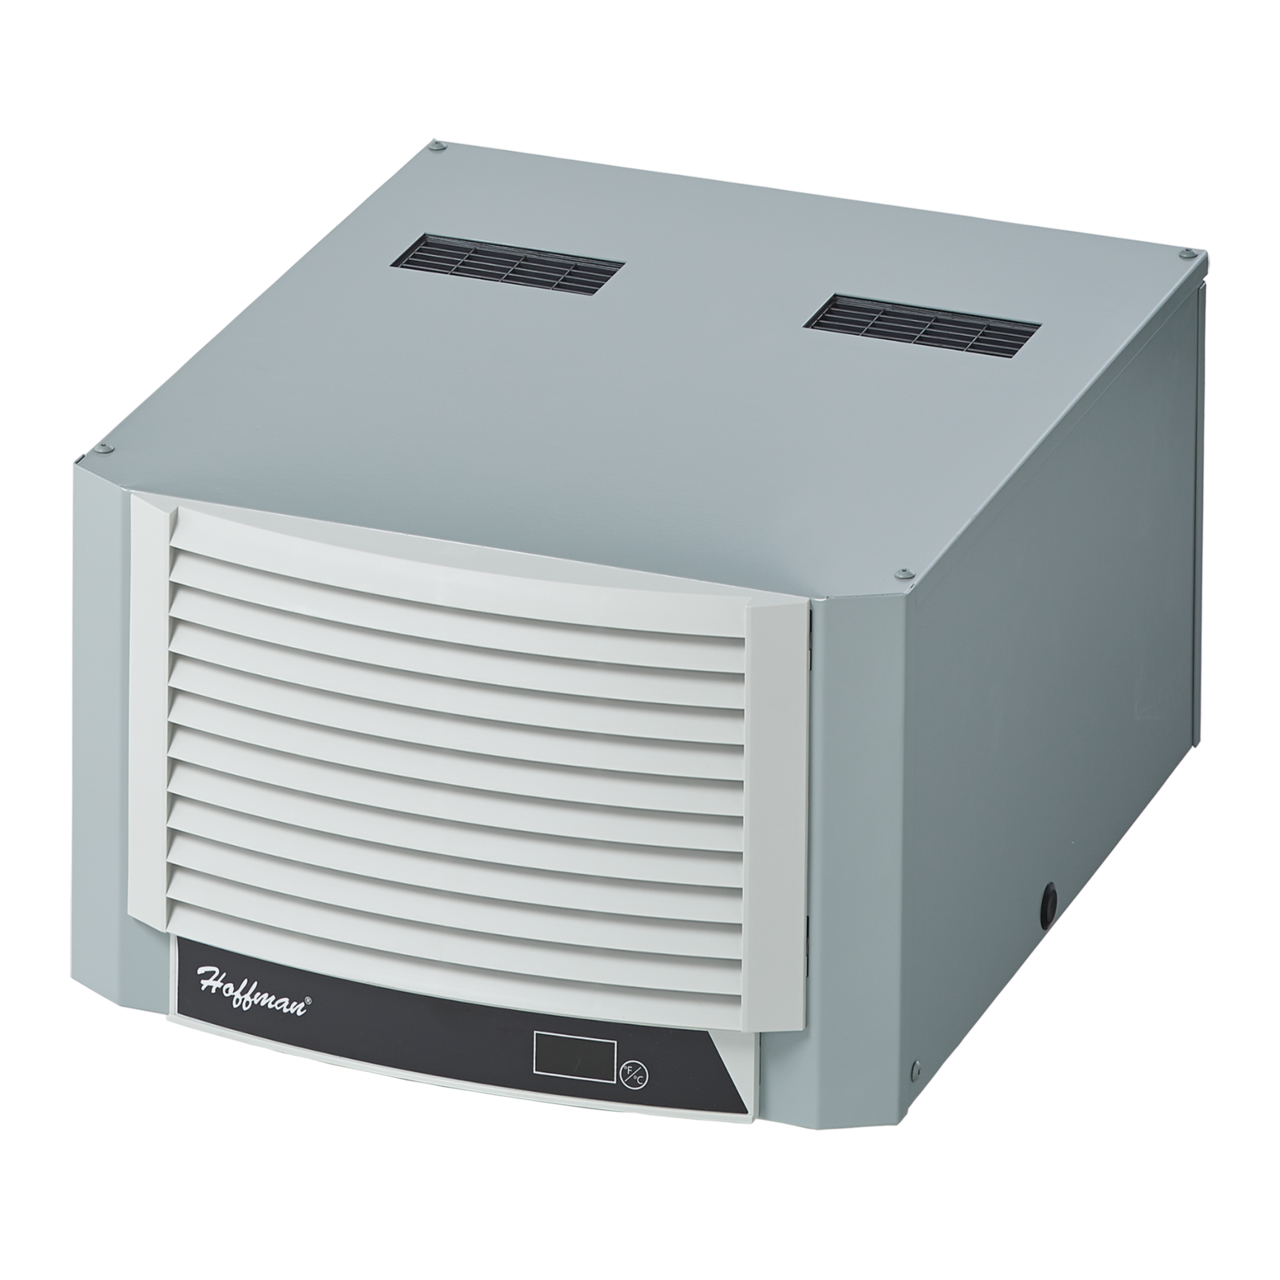 nVent HOFFMAN Genesis™ MHB110446G400 MCL 1-Phase Indoor Sealed Enclosure Air Conditioner, 400 to 460 VAC, 4.1/4.4 A, 50/60 Hz, NEMA 12 Enclosure, 4000 Btu/hr